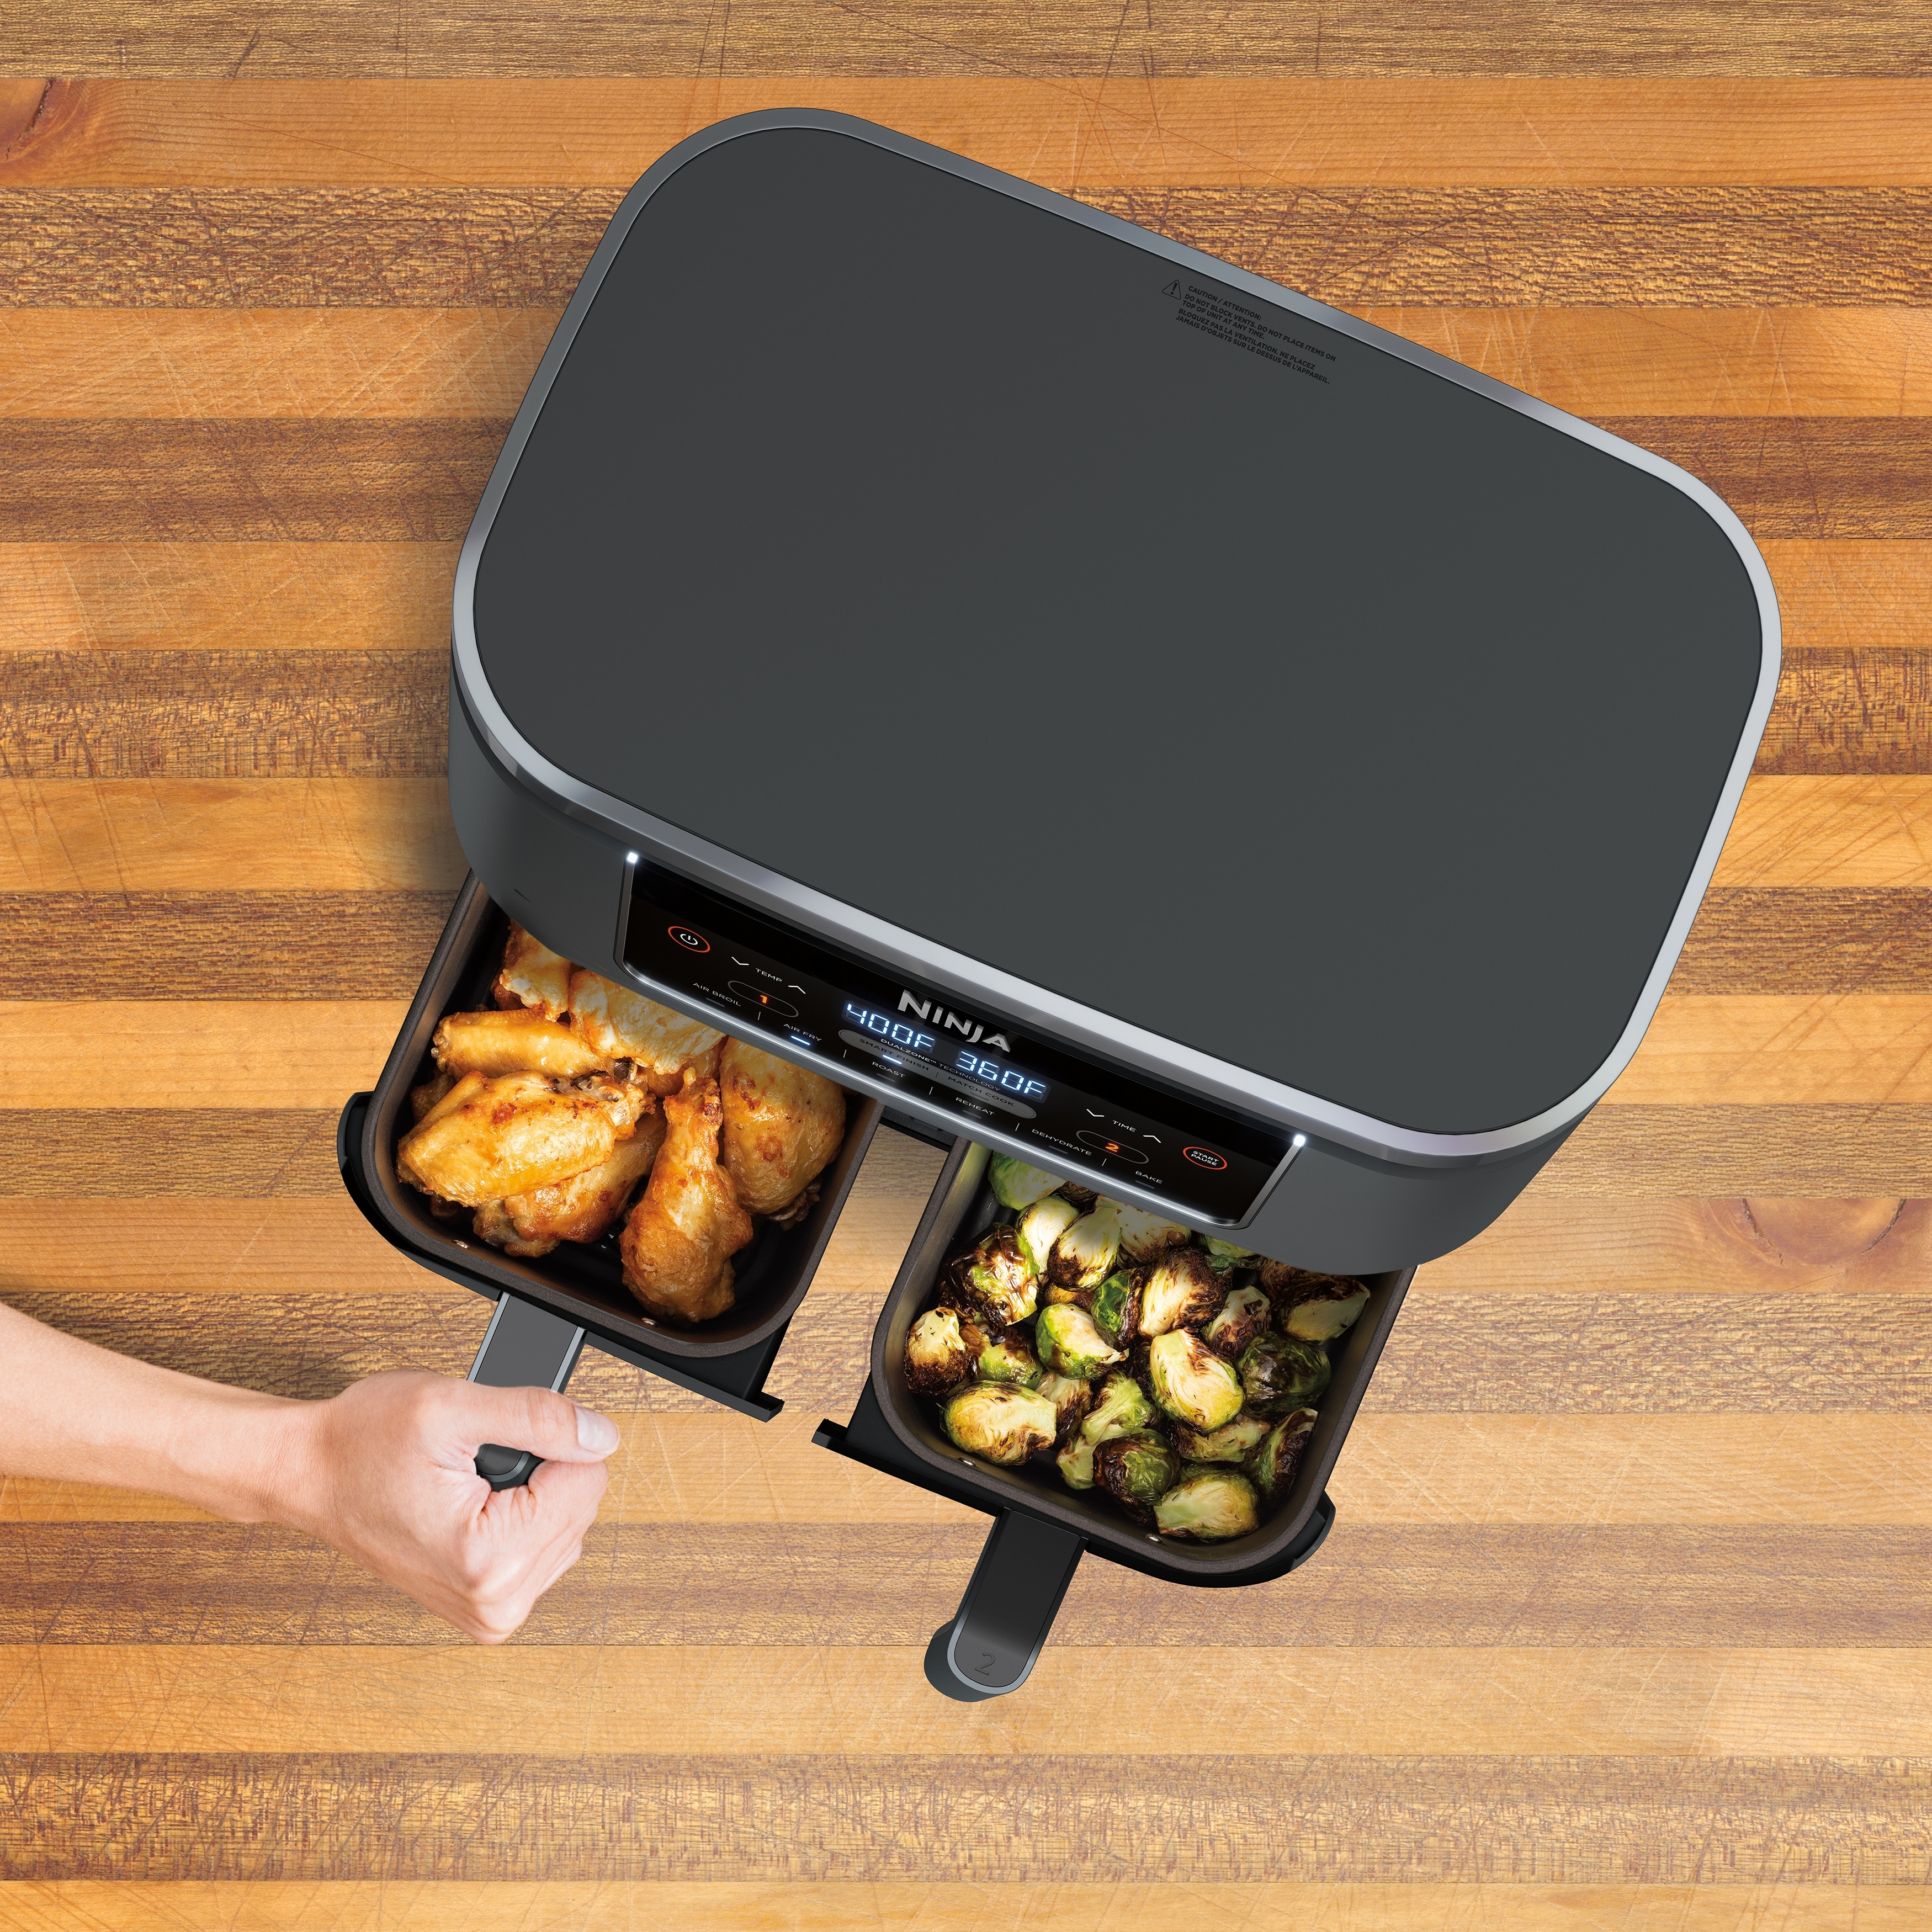 Ninja Foodi 6qt 5-in-1 2-basket Air Fryer With Dualzone Technology